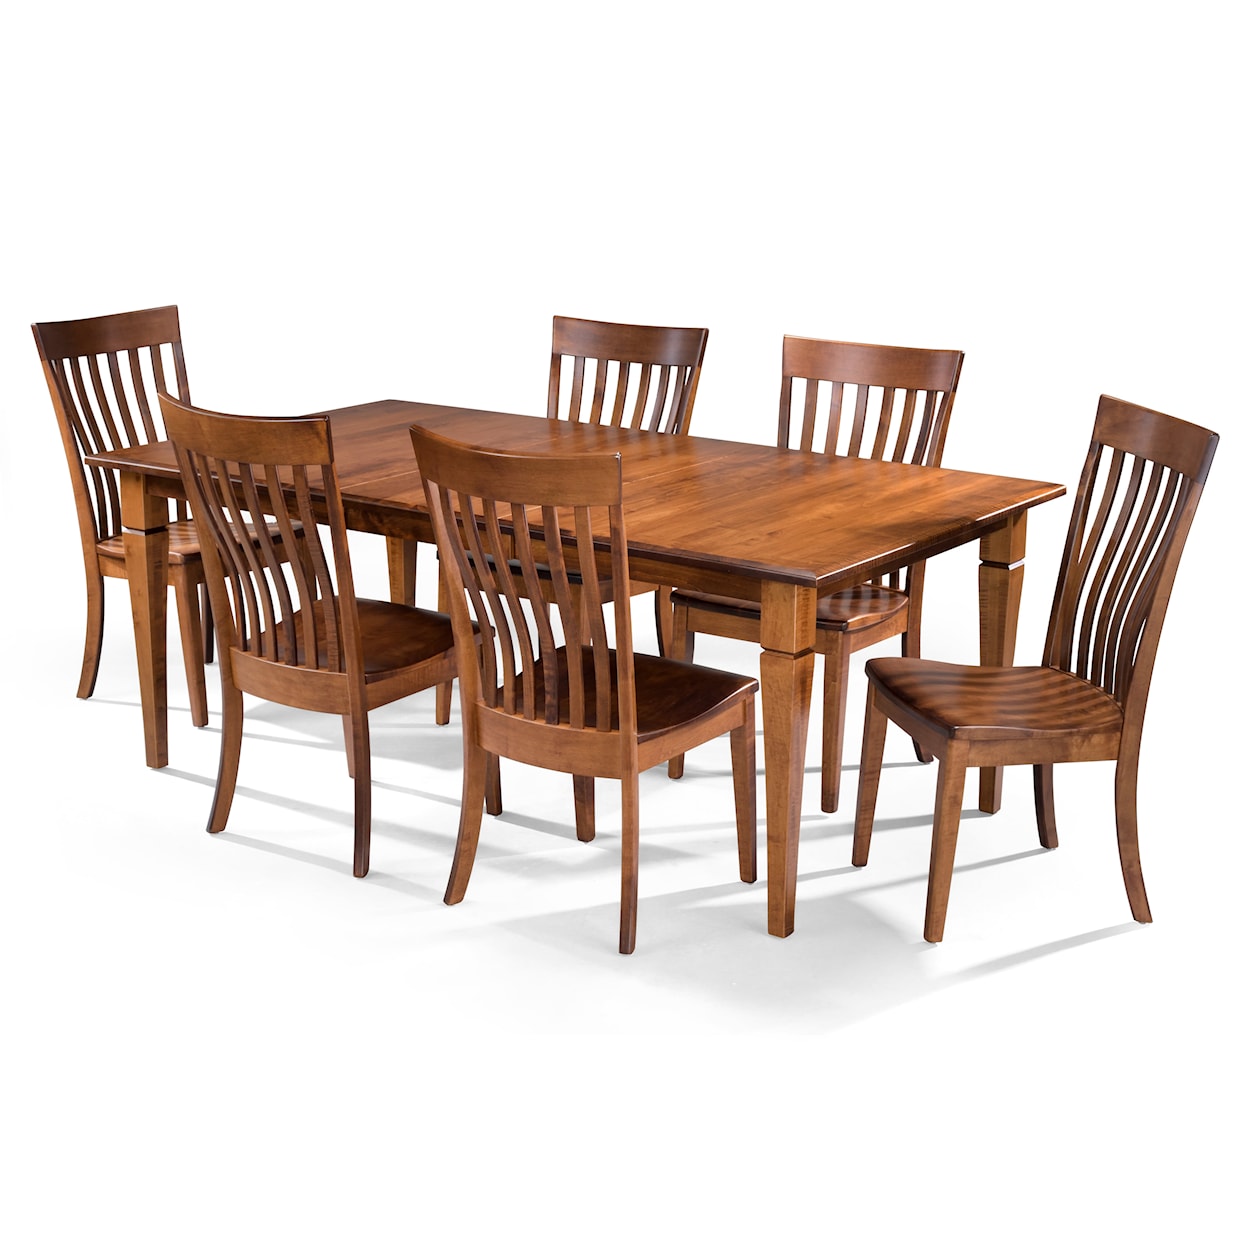 Archbold Furniture Amish Essentials Casual Dining 7pc Rectangular Dining Set 